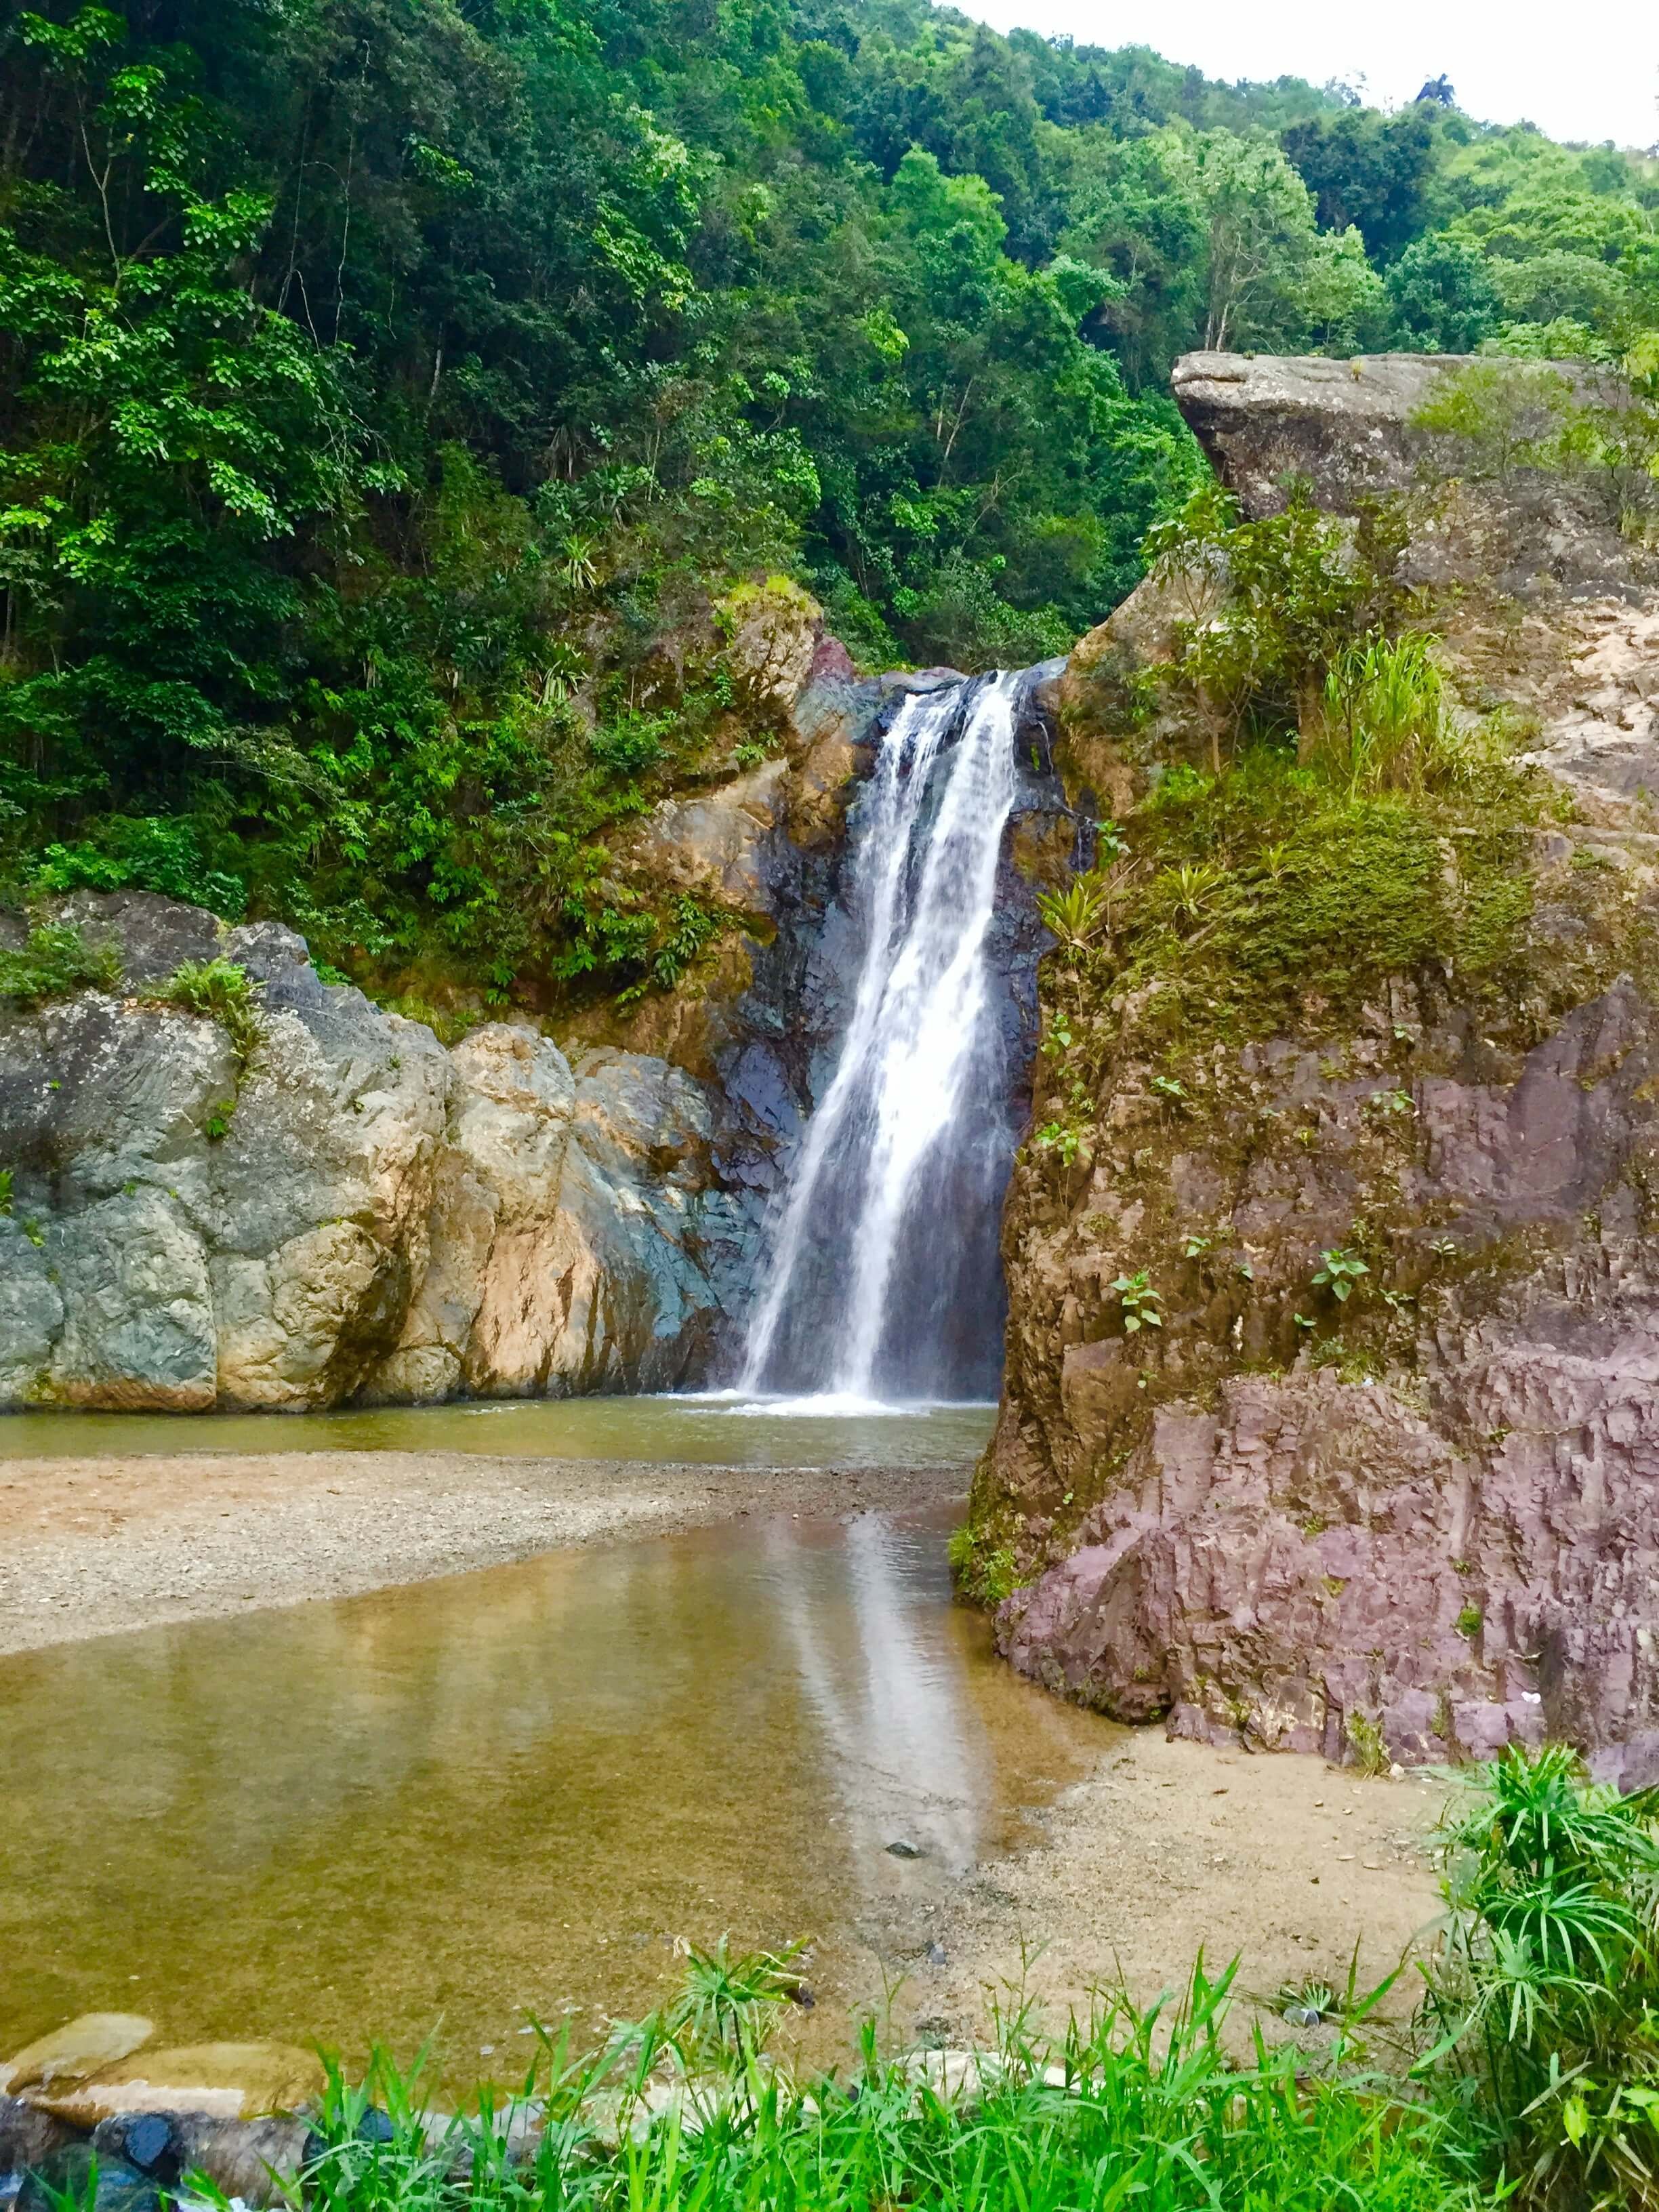 Salto (Waterfall) Baiguate near Jarabocoa, Dominican Republic